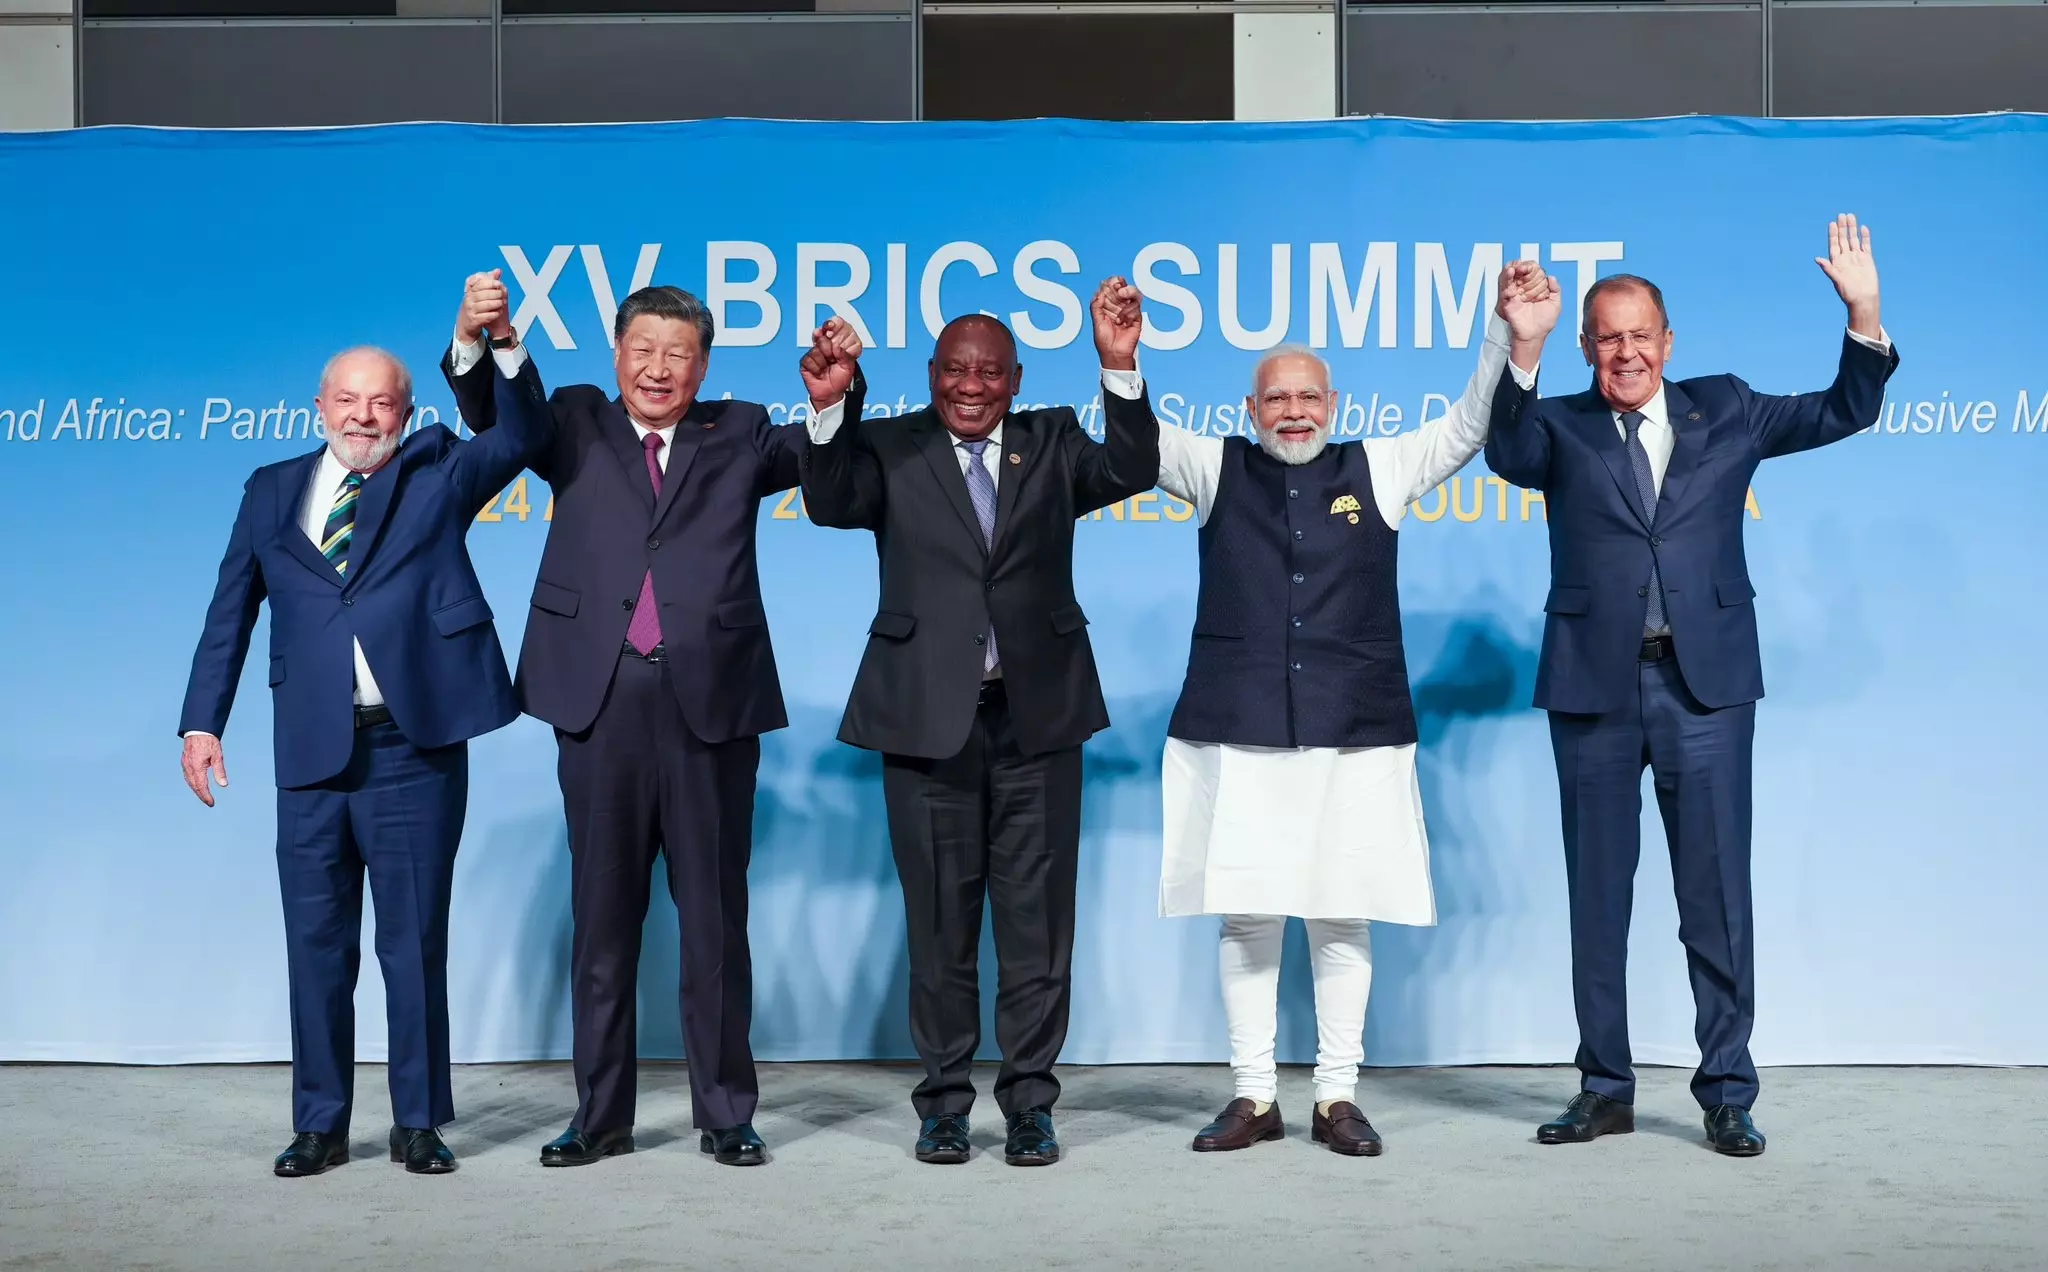 India supports consensus-based expansion of BRICS: PM Modi